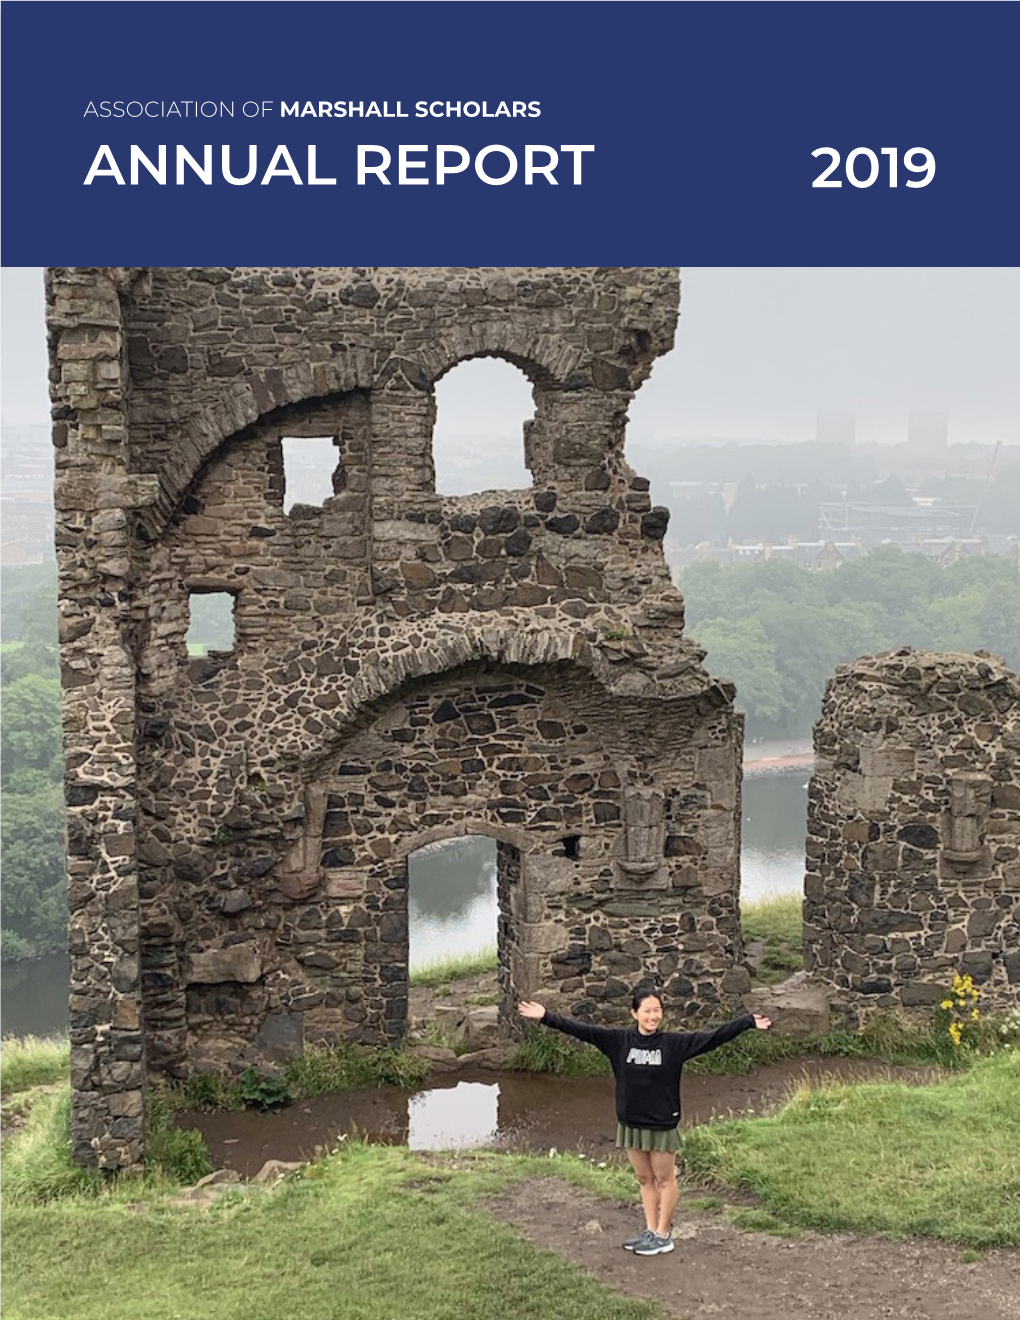 ANNUAL REPORT 2019 Summary